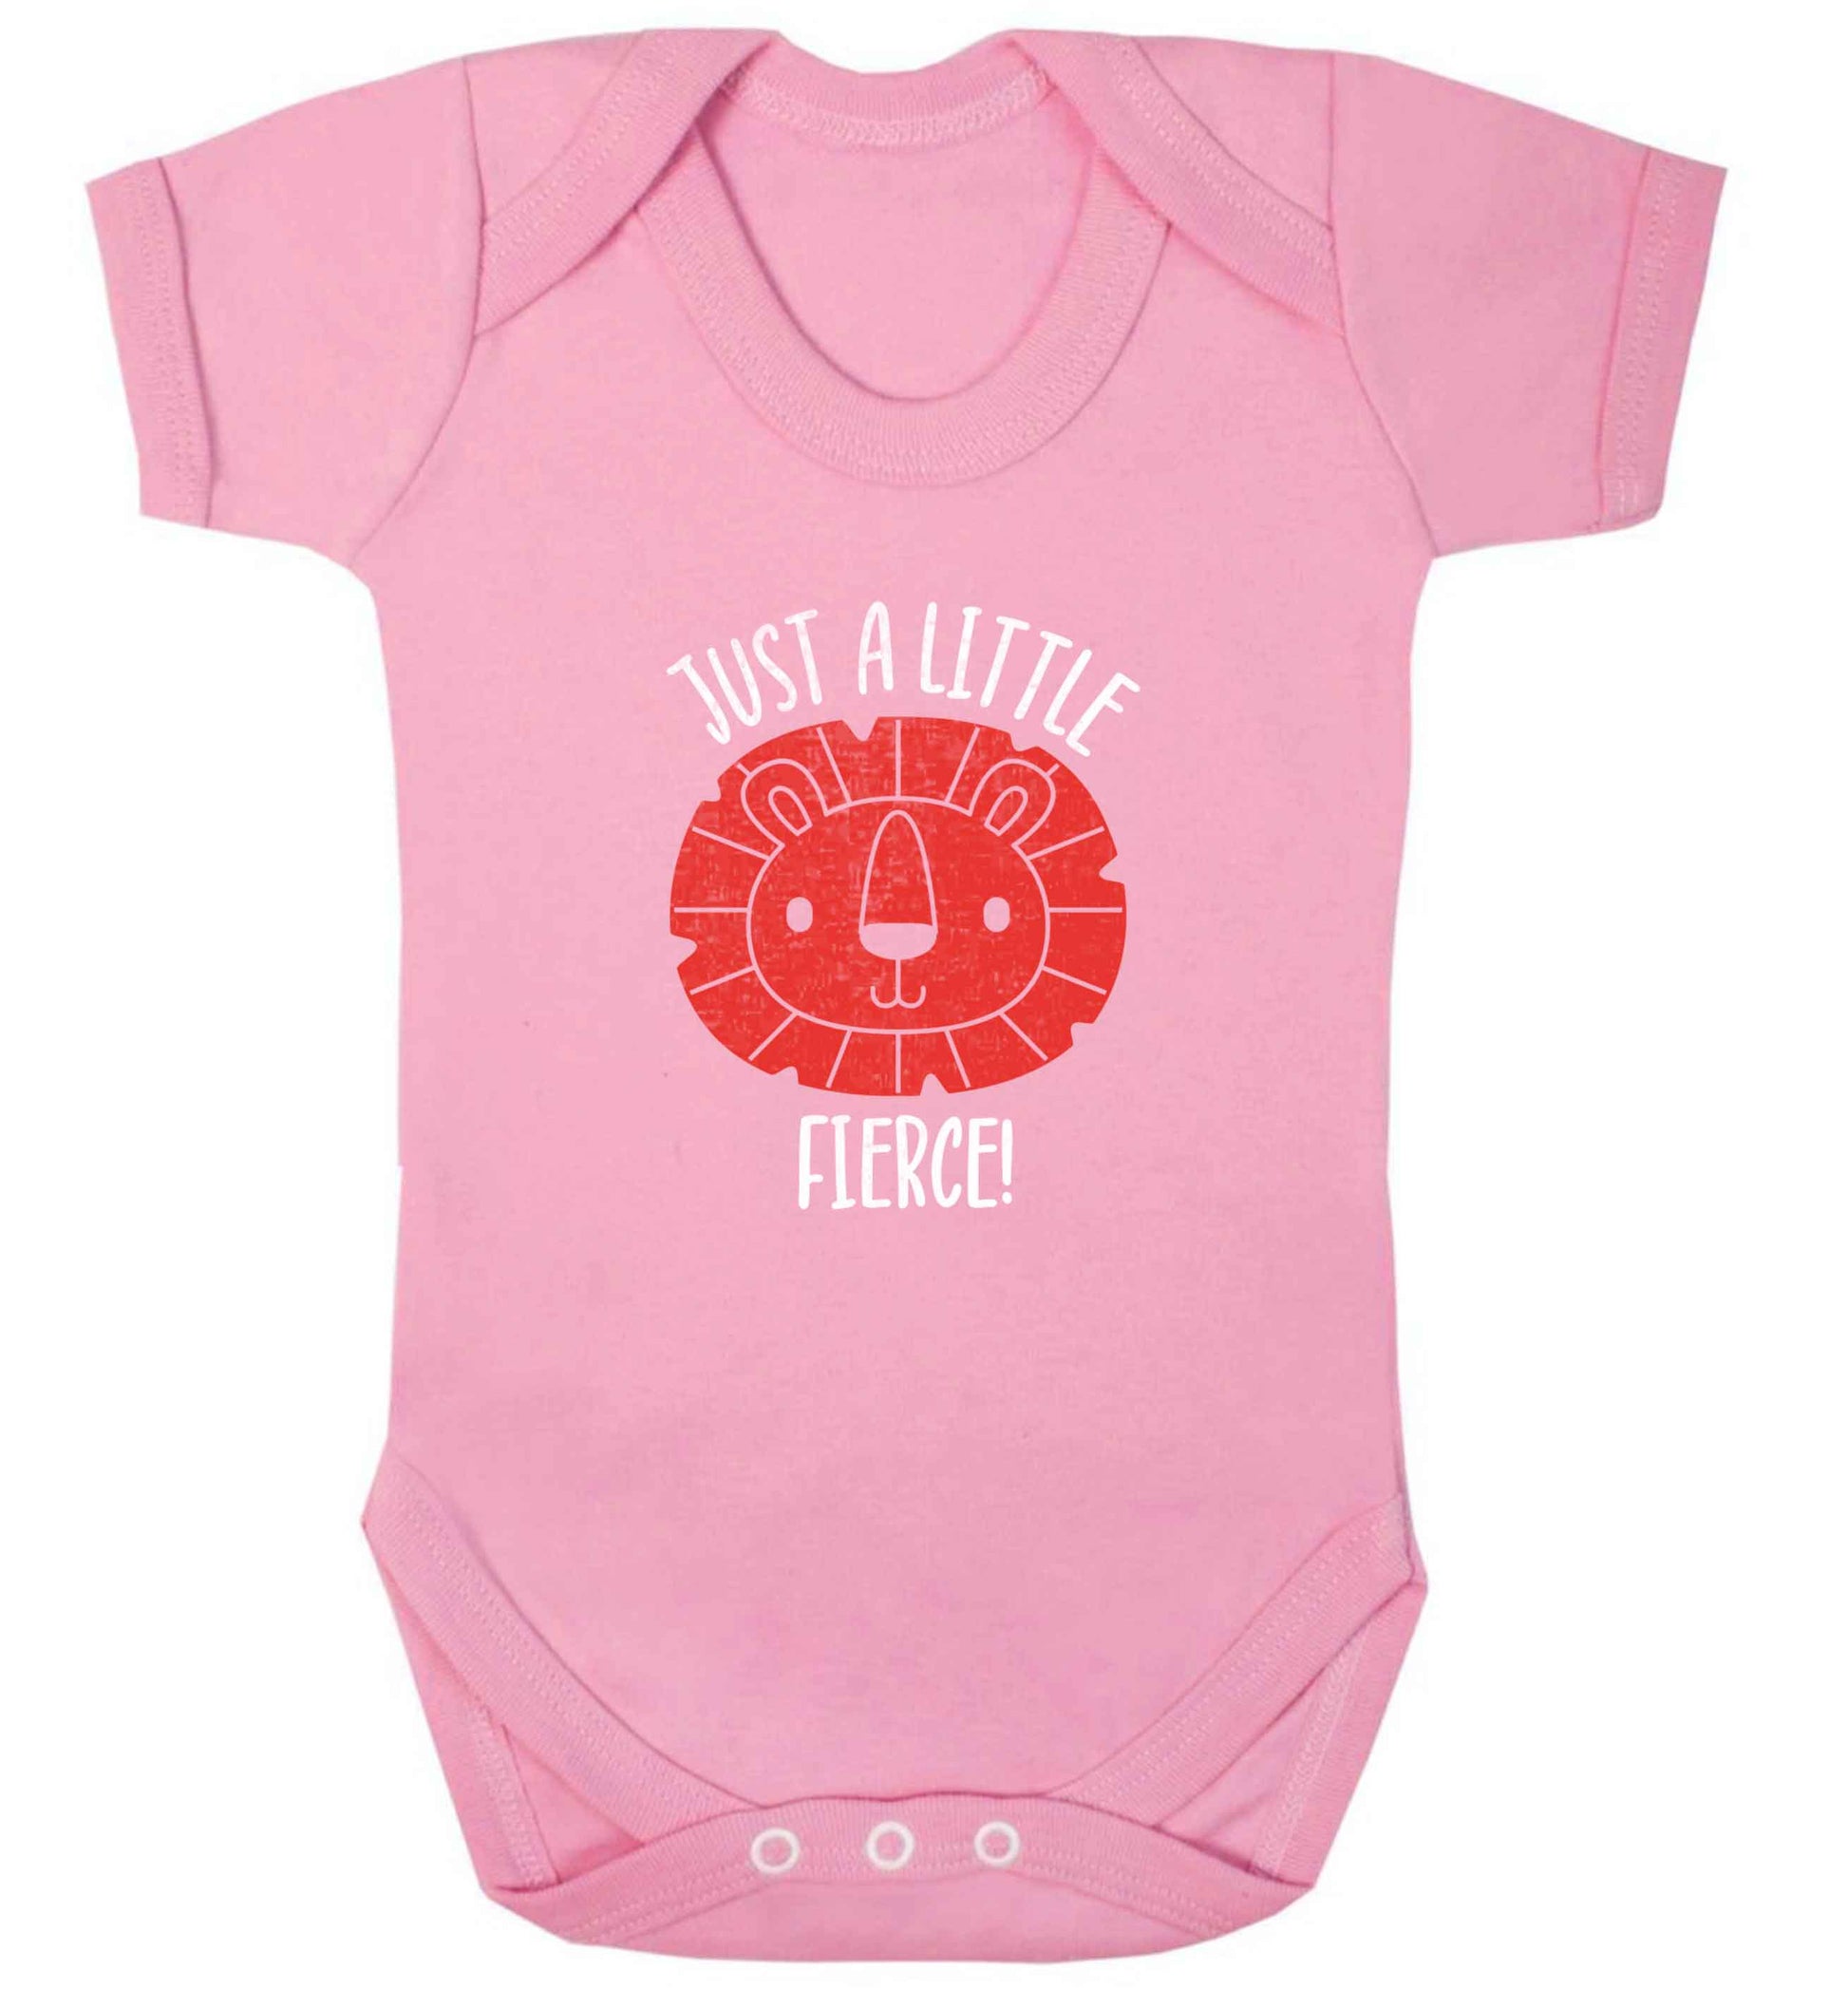 Just a little fierce baby vest pale pink 18-24 months